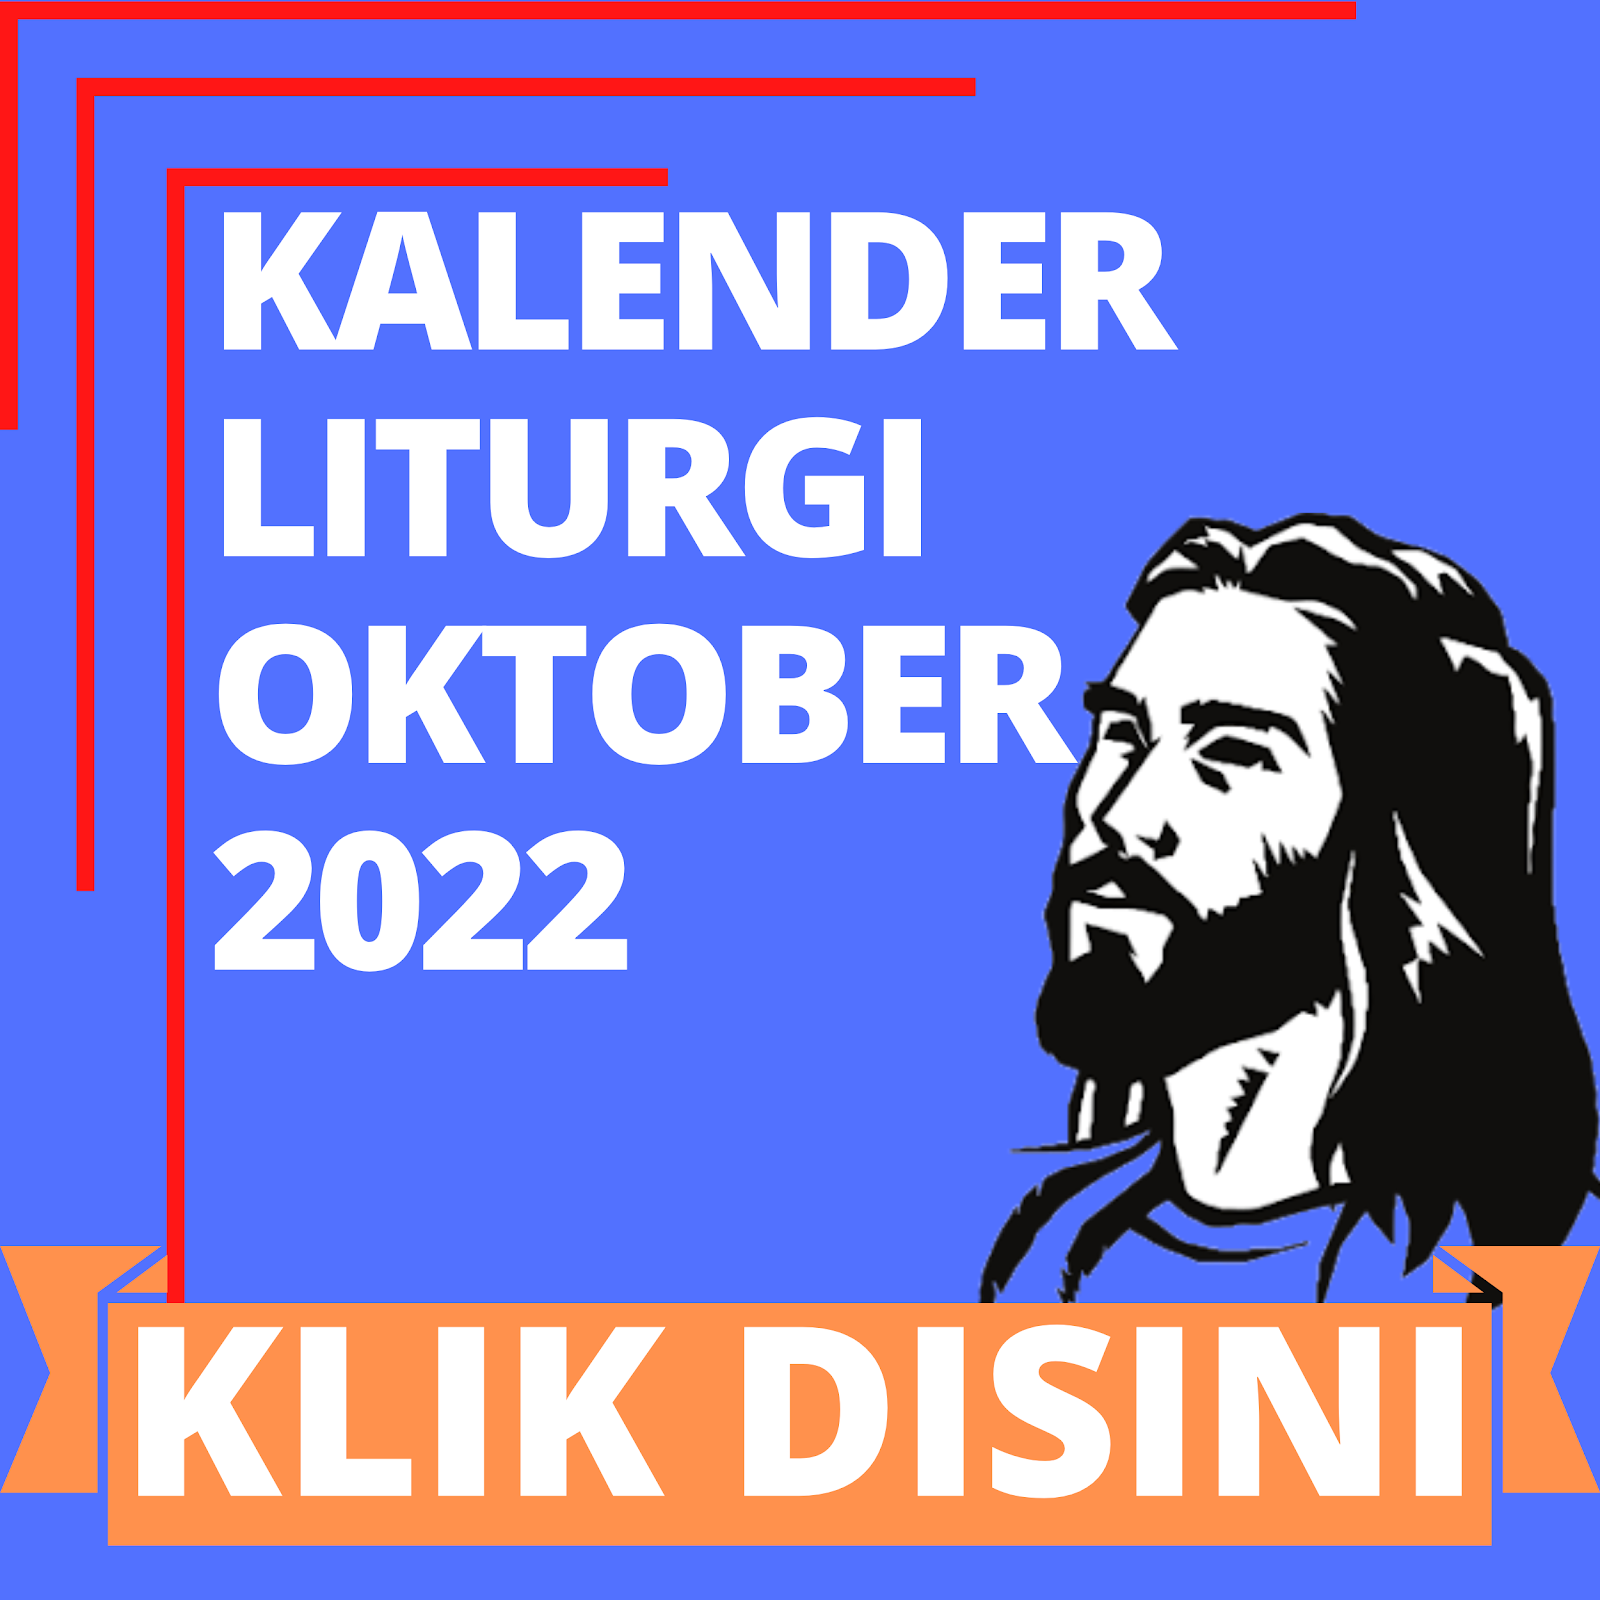 Kalender lIturgi Oktober 2022